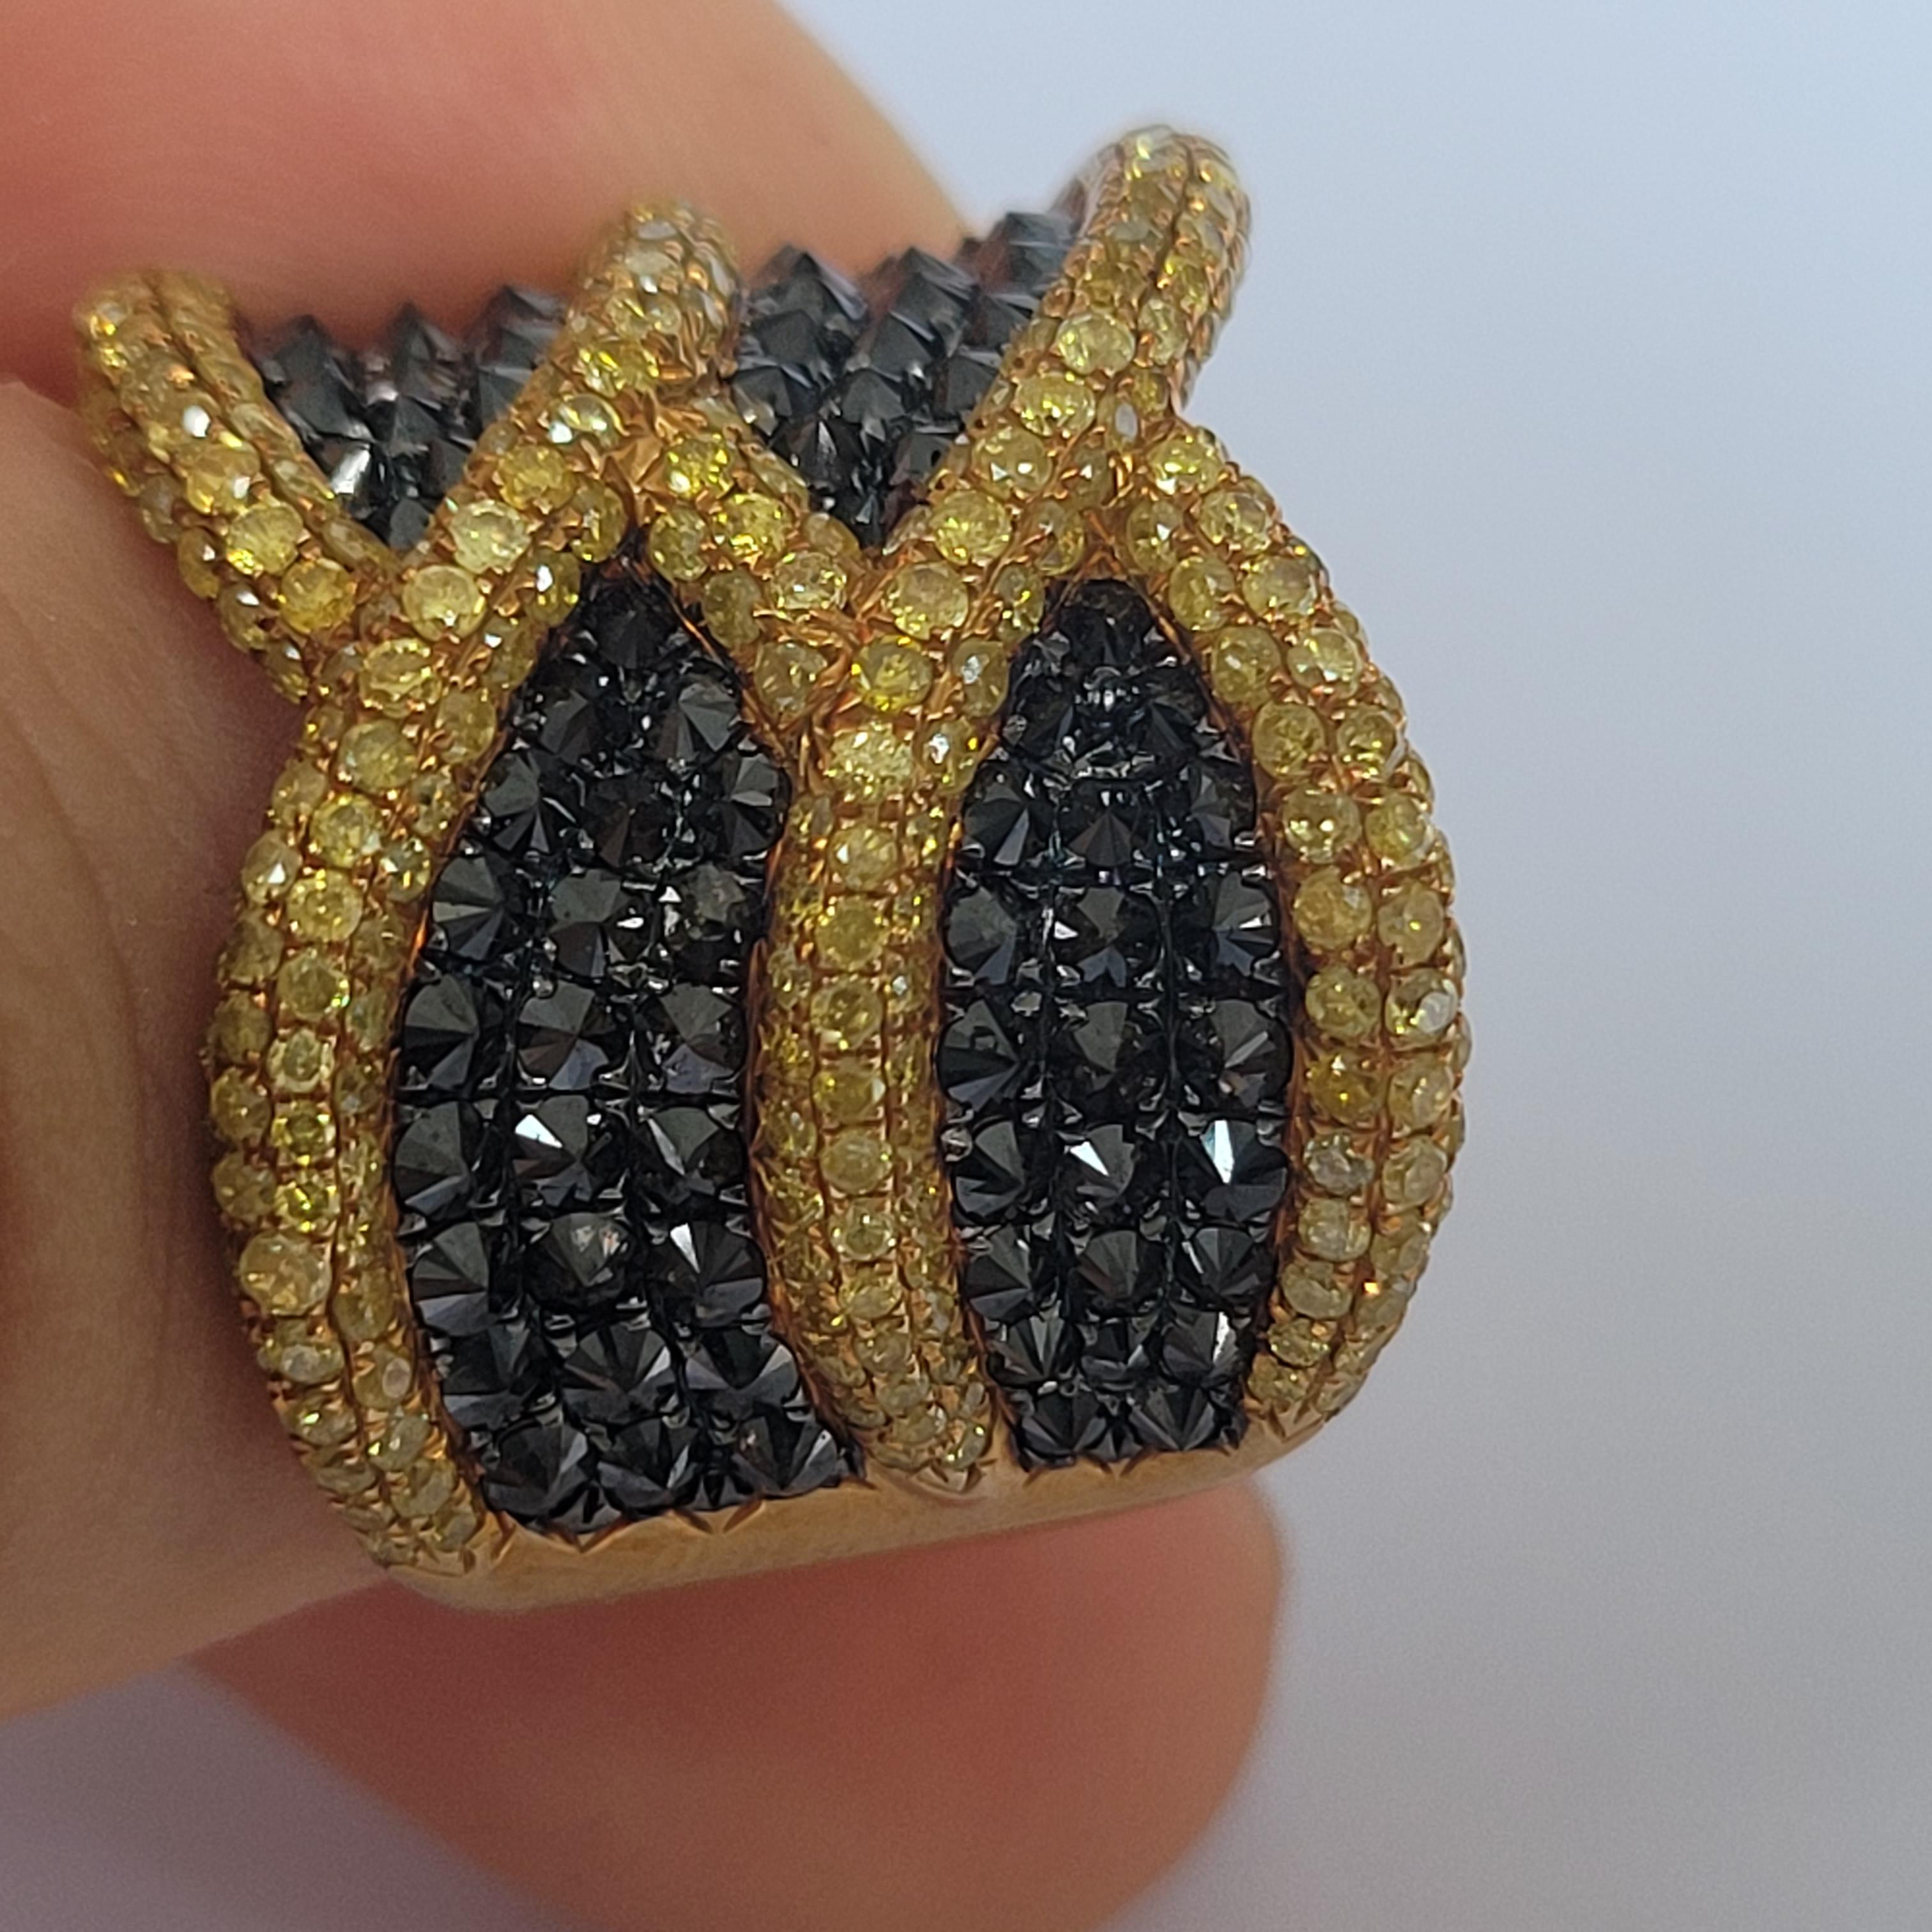 Brilliant Cut Yellow & Black Diamond Ring, Absolutely Stunning